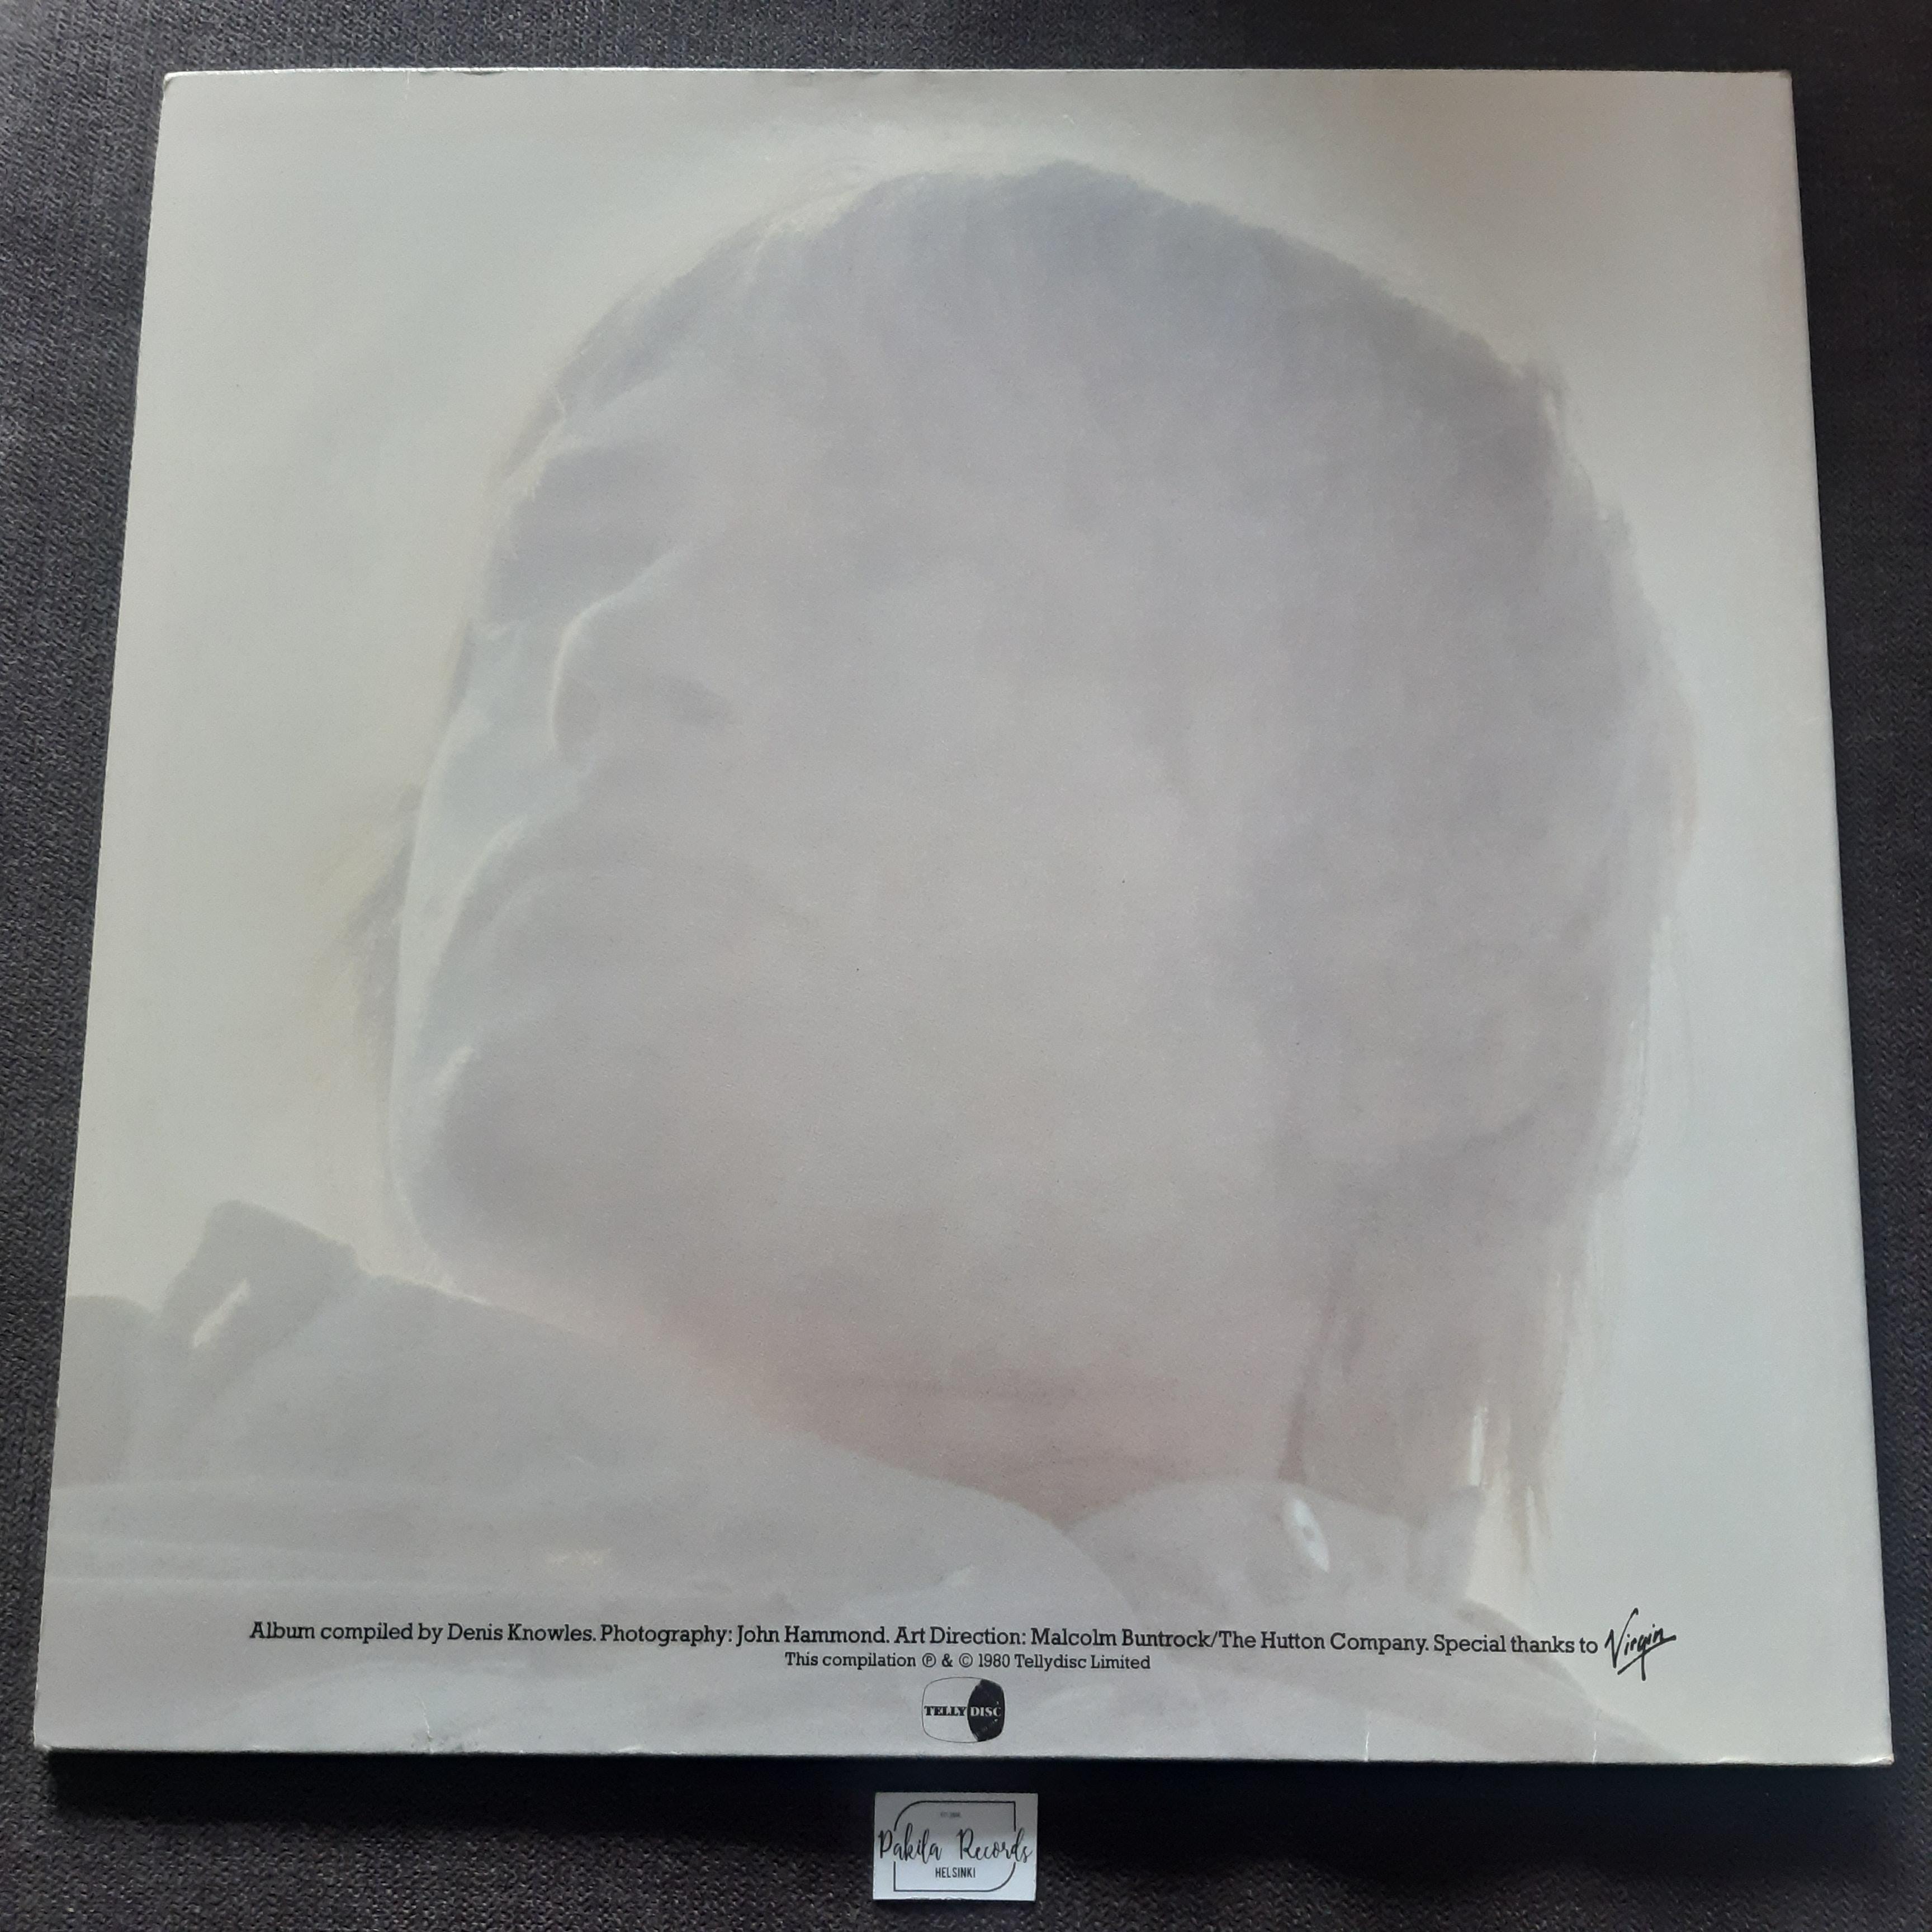 Mike Oldfield - Impressions - 2 LP (käytetty)